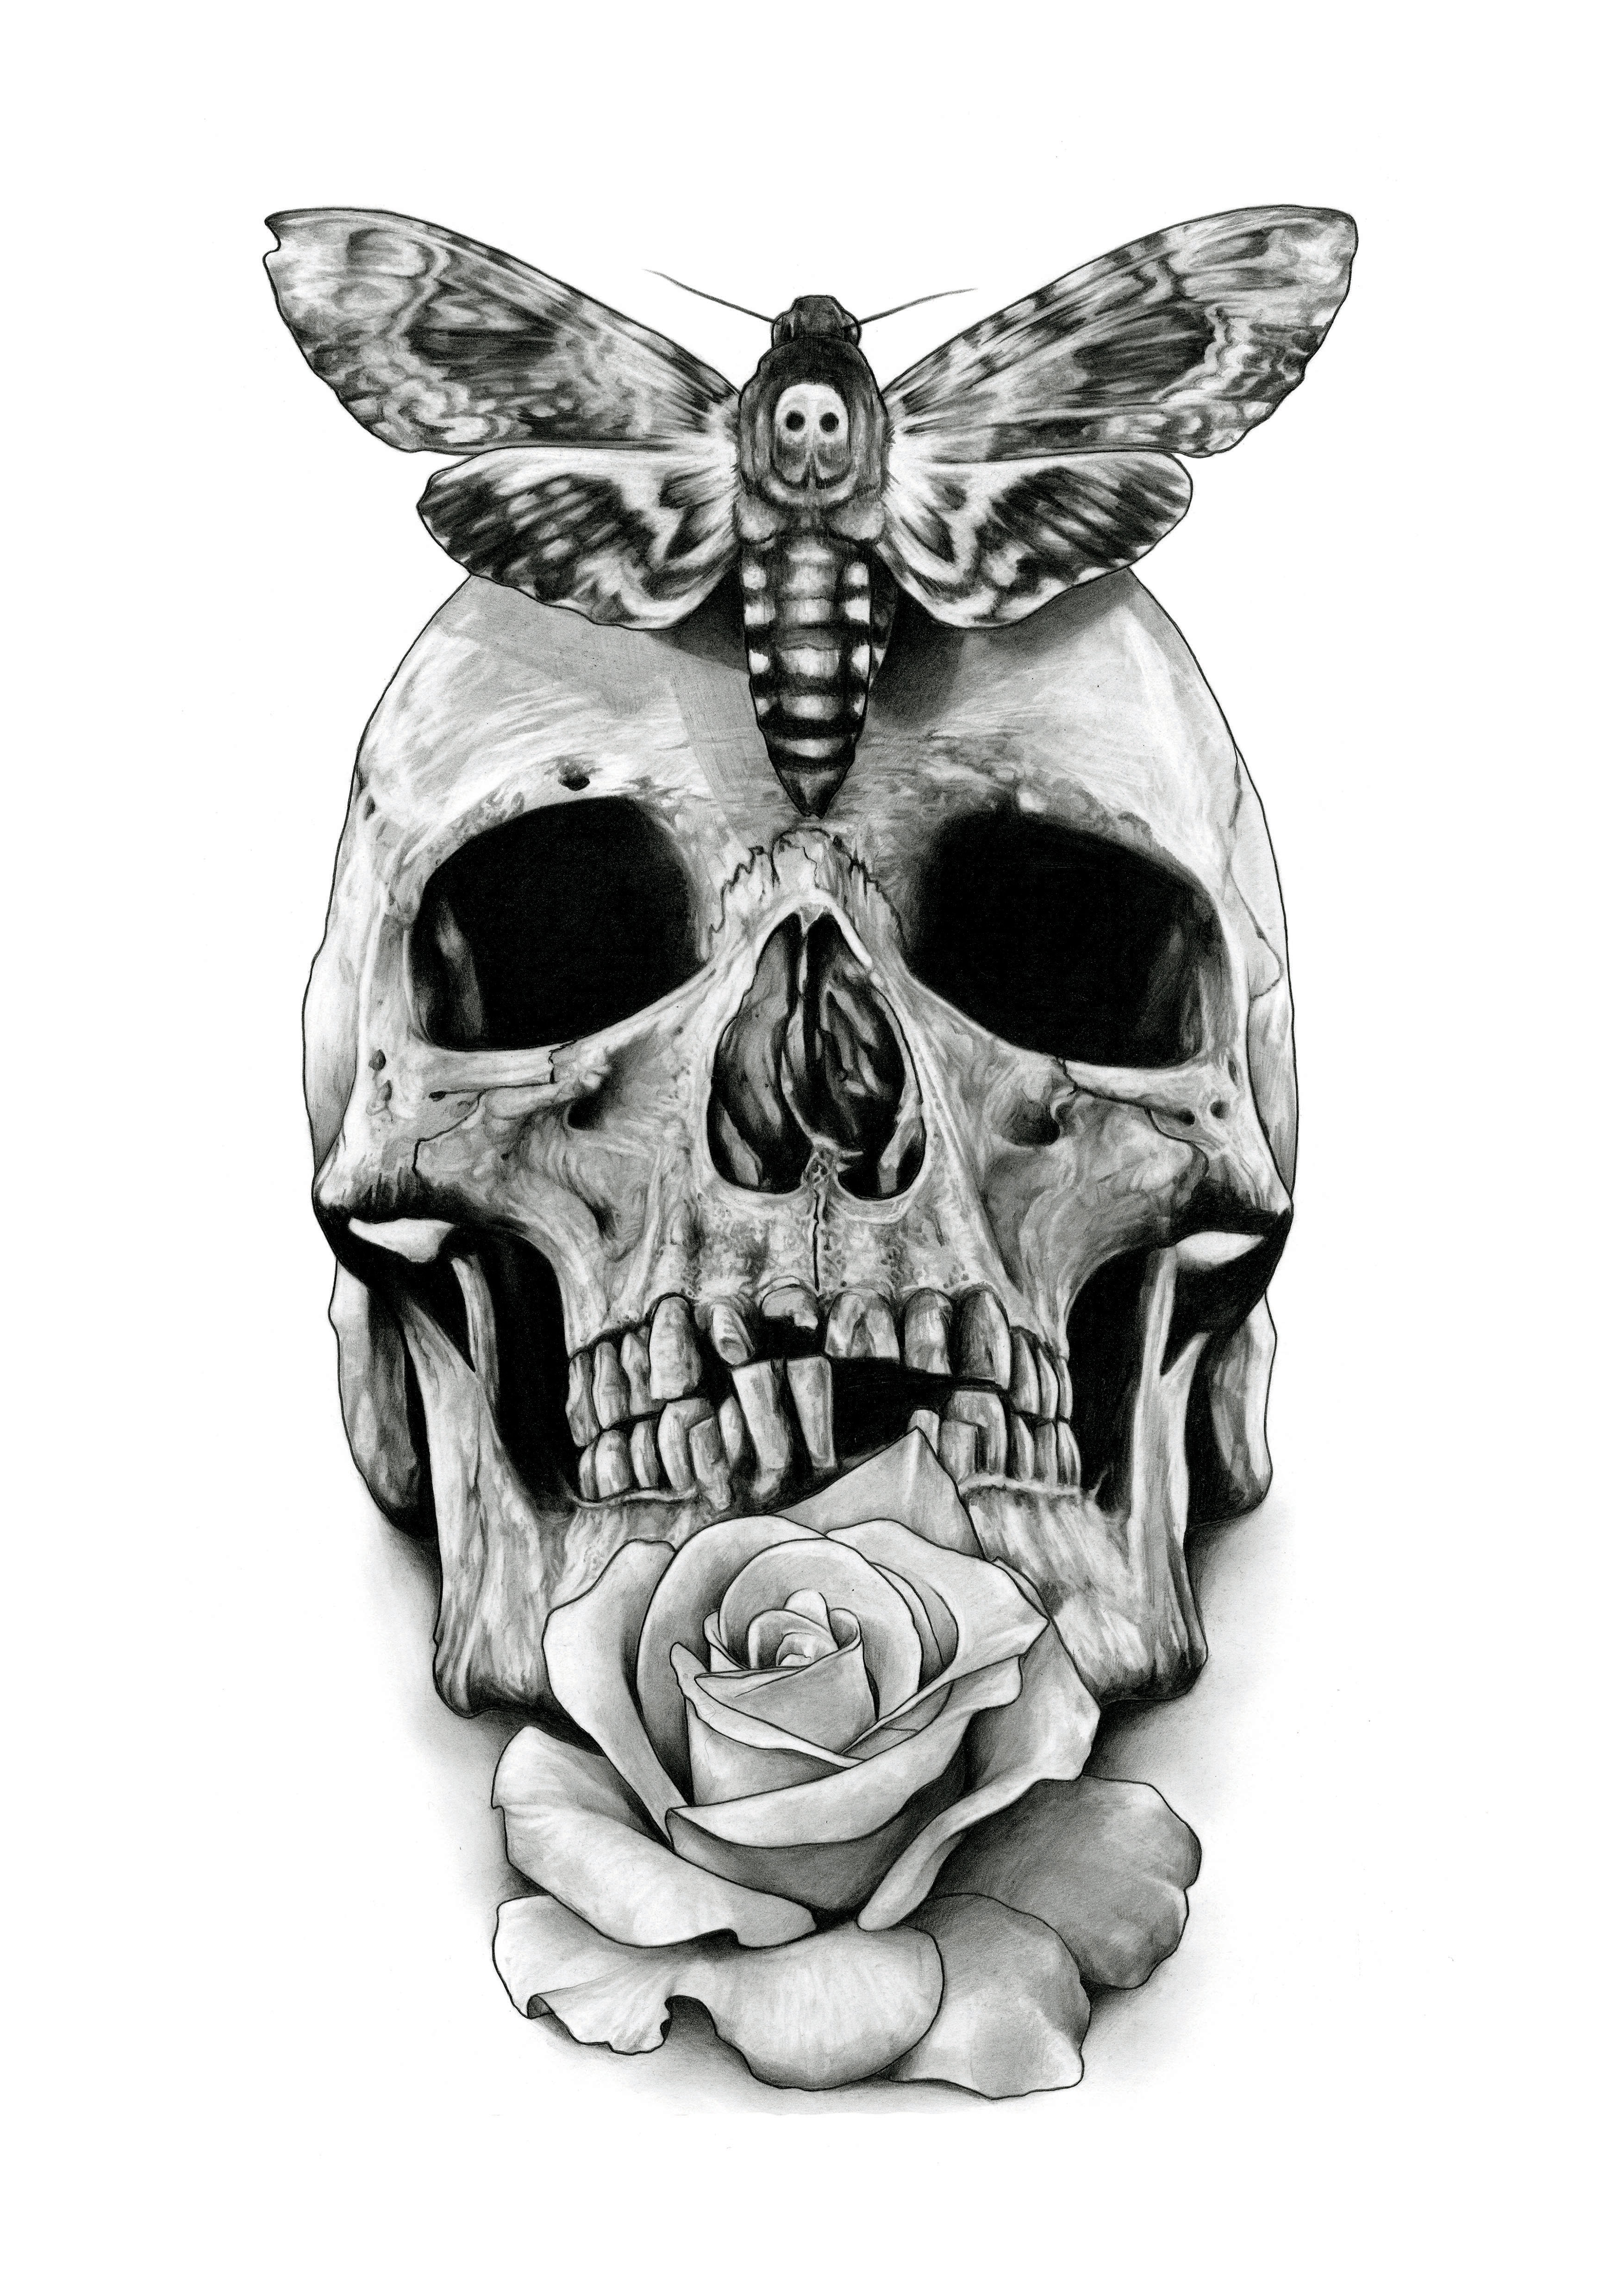 Skull Tattoo design drawing by AaronKingIllustrator on Clipart library